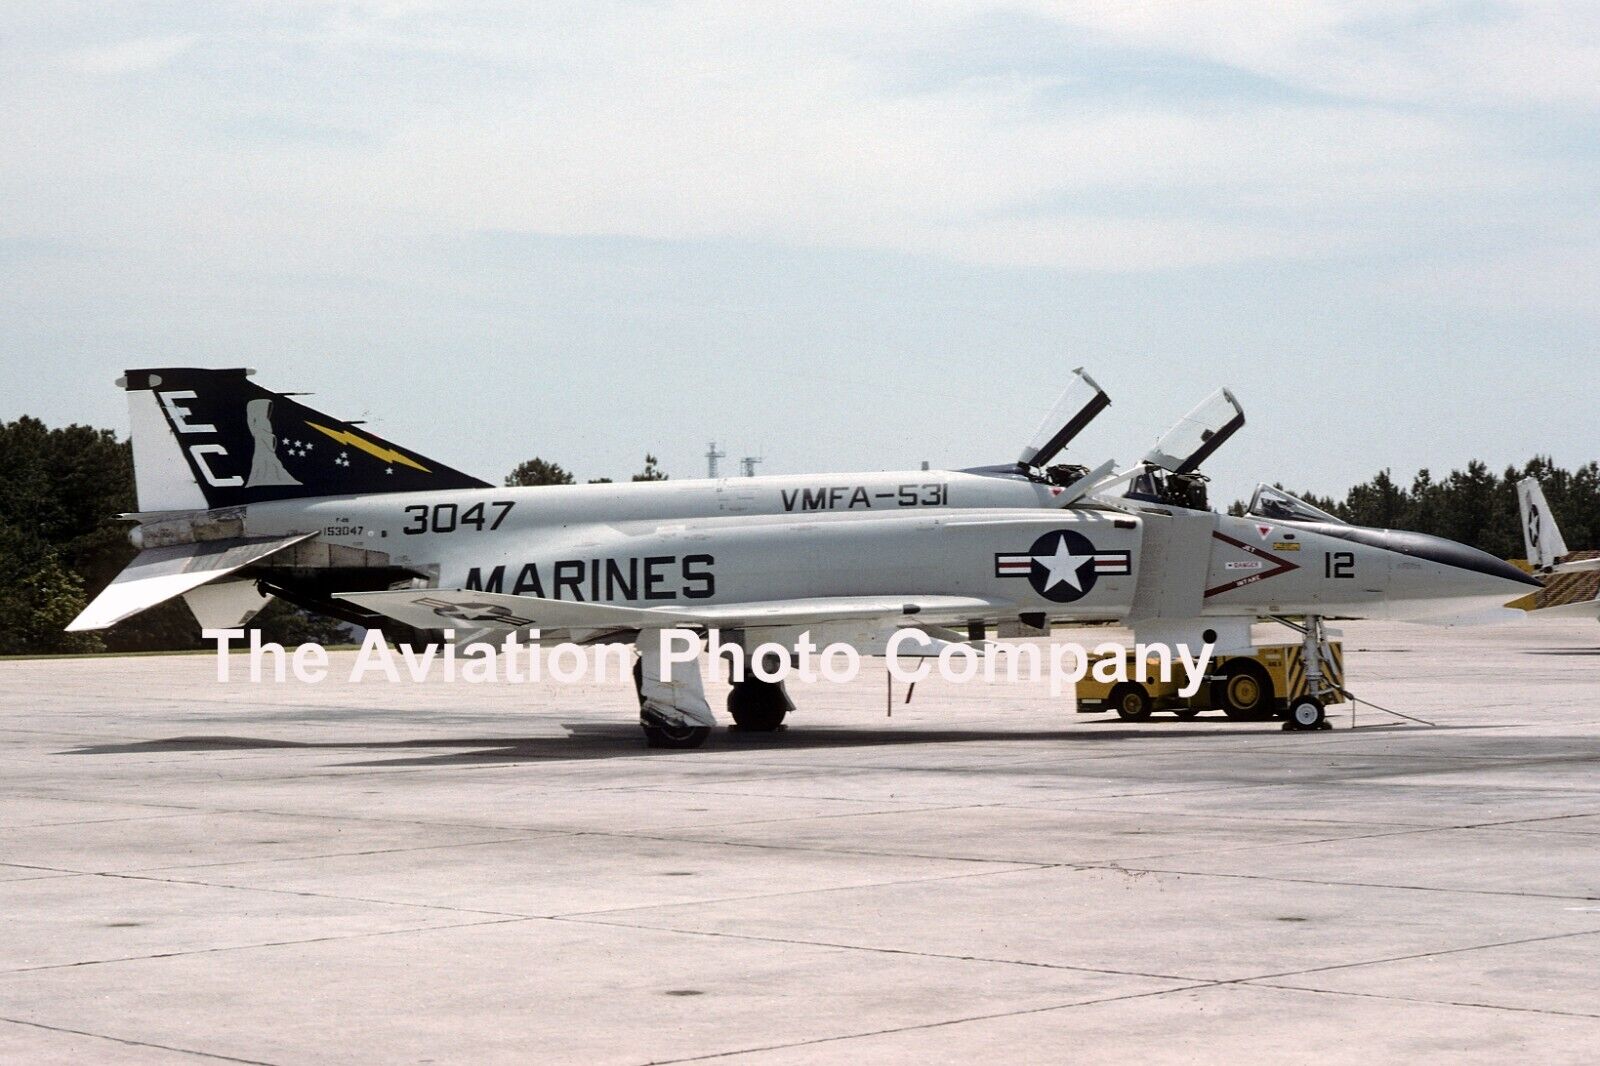 US Marines VMFA-531 McDonnell F-4N Phantom 153047/EC-12 (1975) Photograph